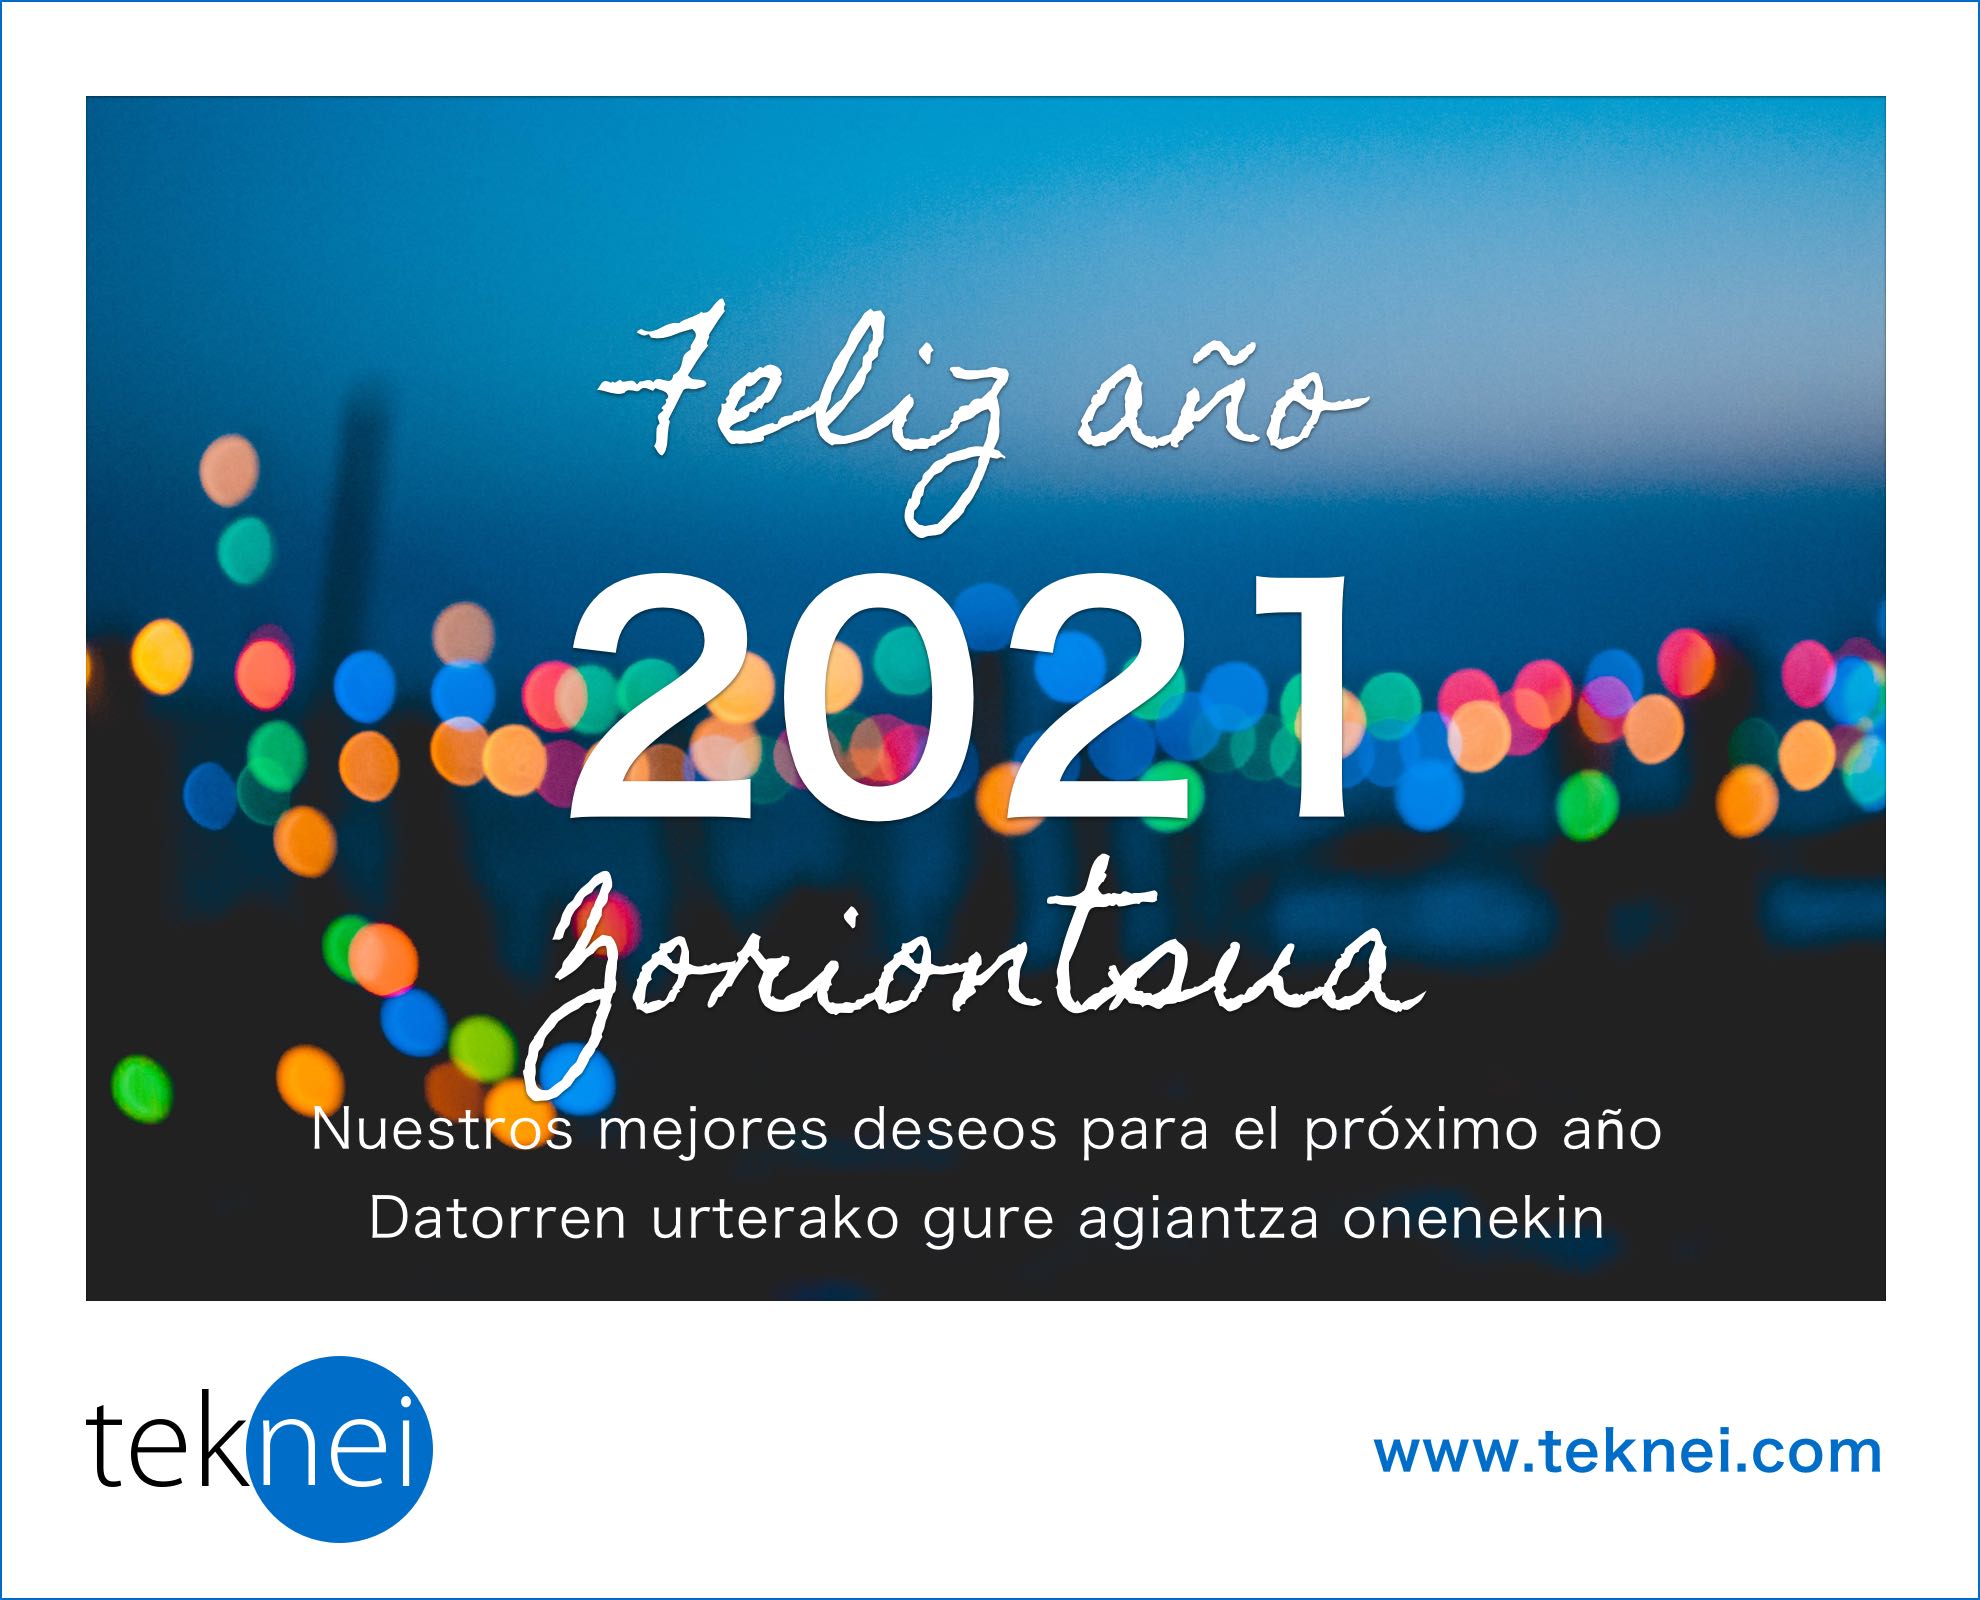 Felicitación de Navidad de Teknei 2021. Versión euskera